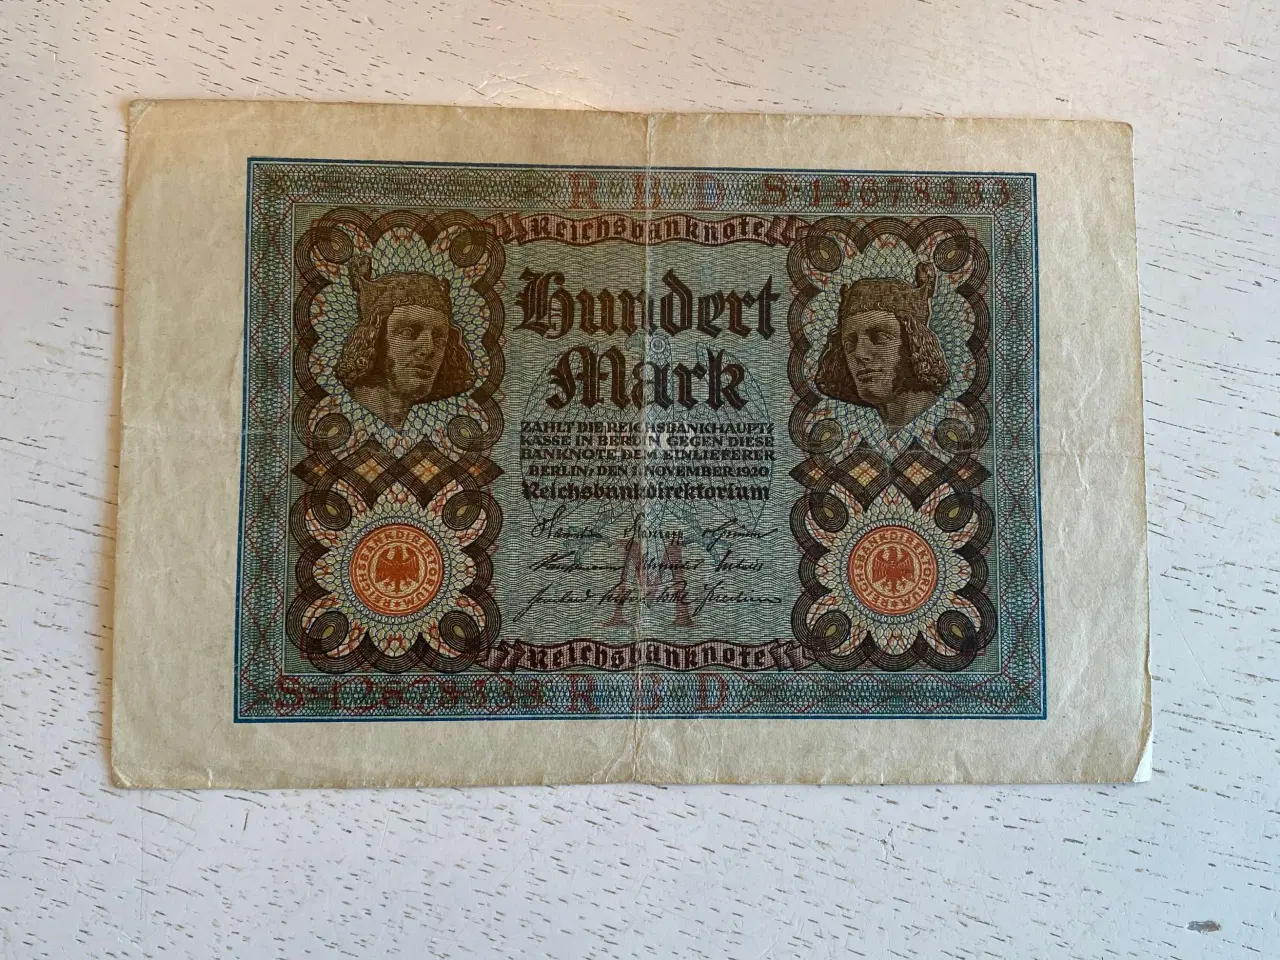 Billede 1 - 100 mark seddel fra 1920